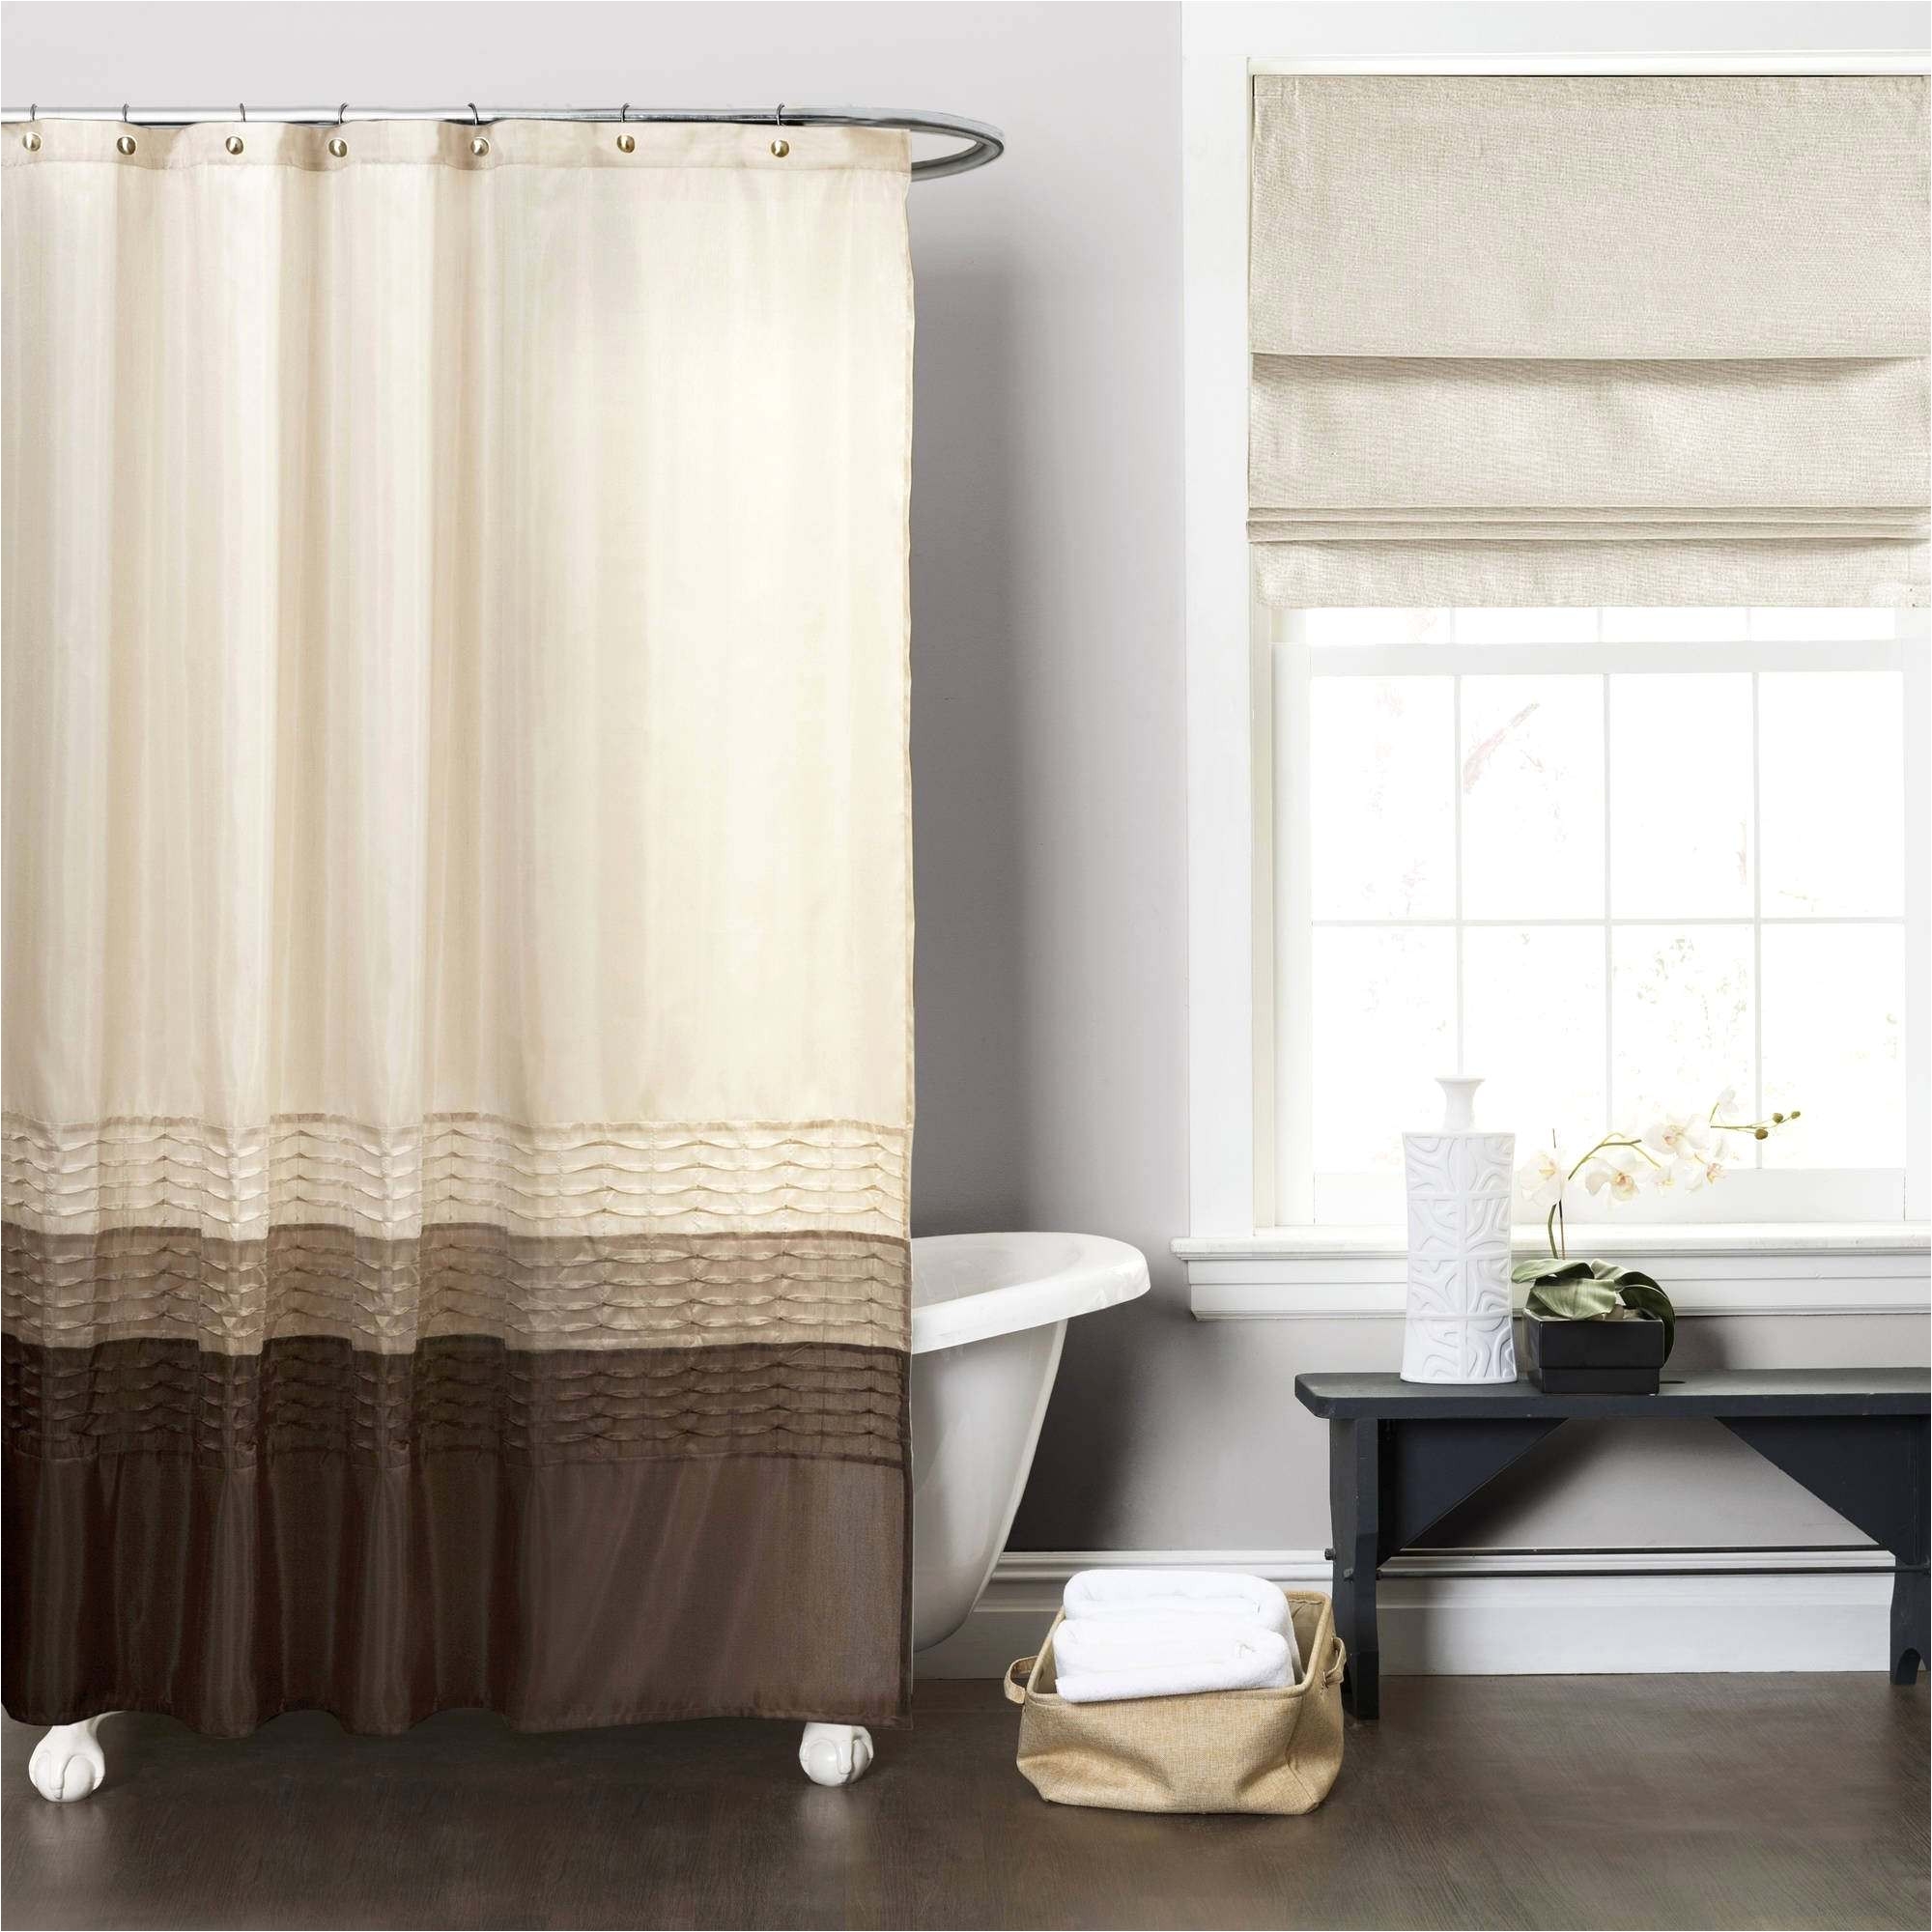 shear curtains new outstanding dillards shower curtains fresh furniture high end 0d